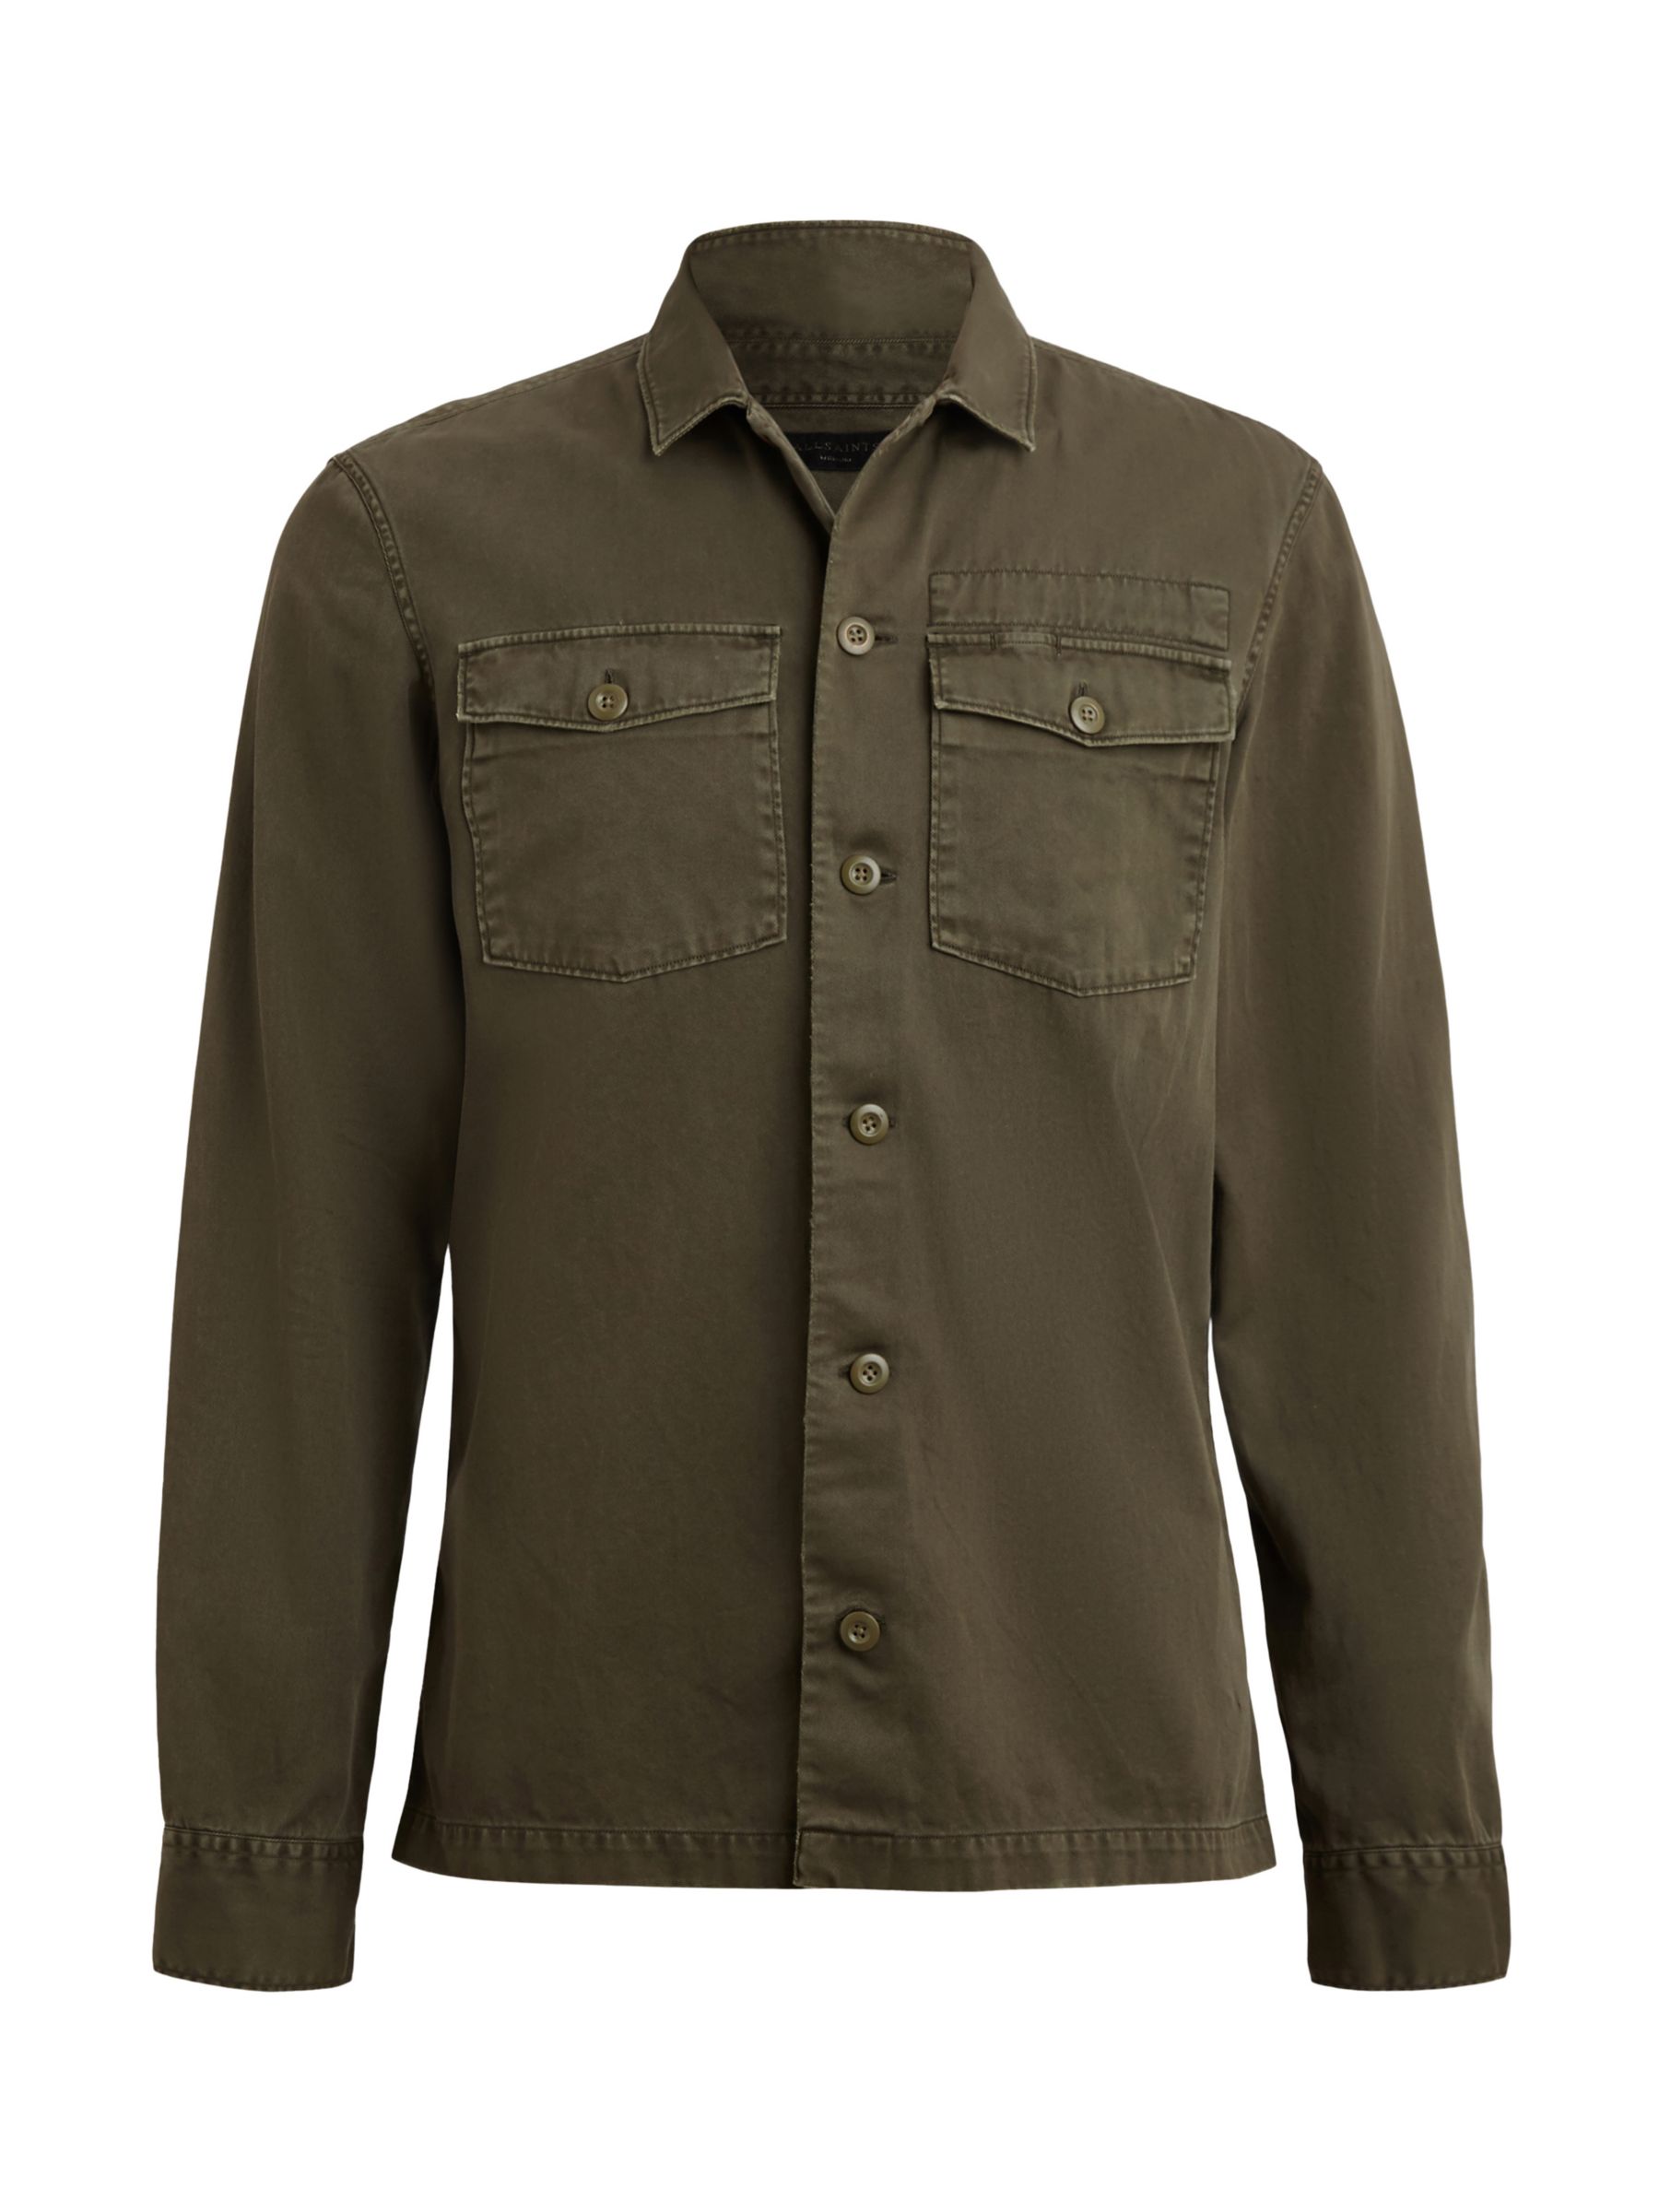 Buy AllSaints Spotter Slim Fit Military Shirt Online at johnlewis.com